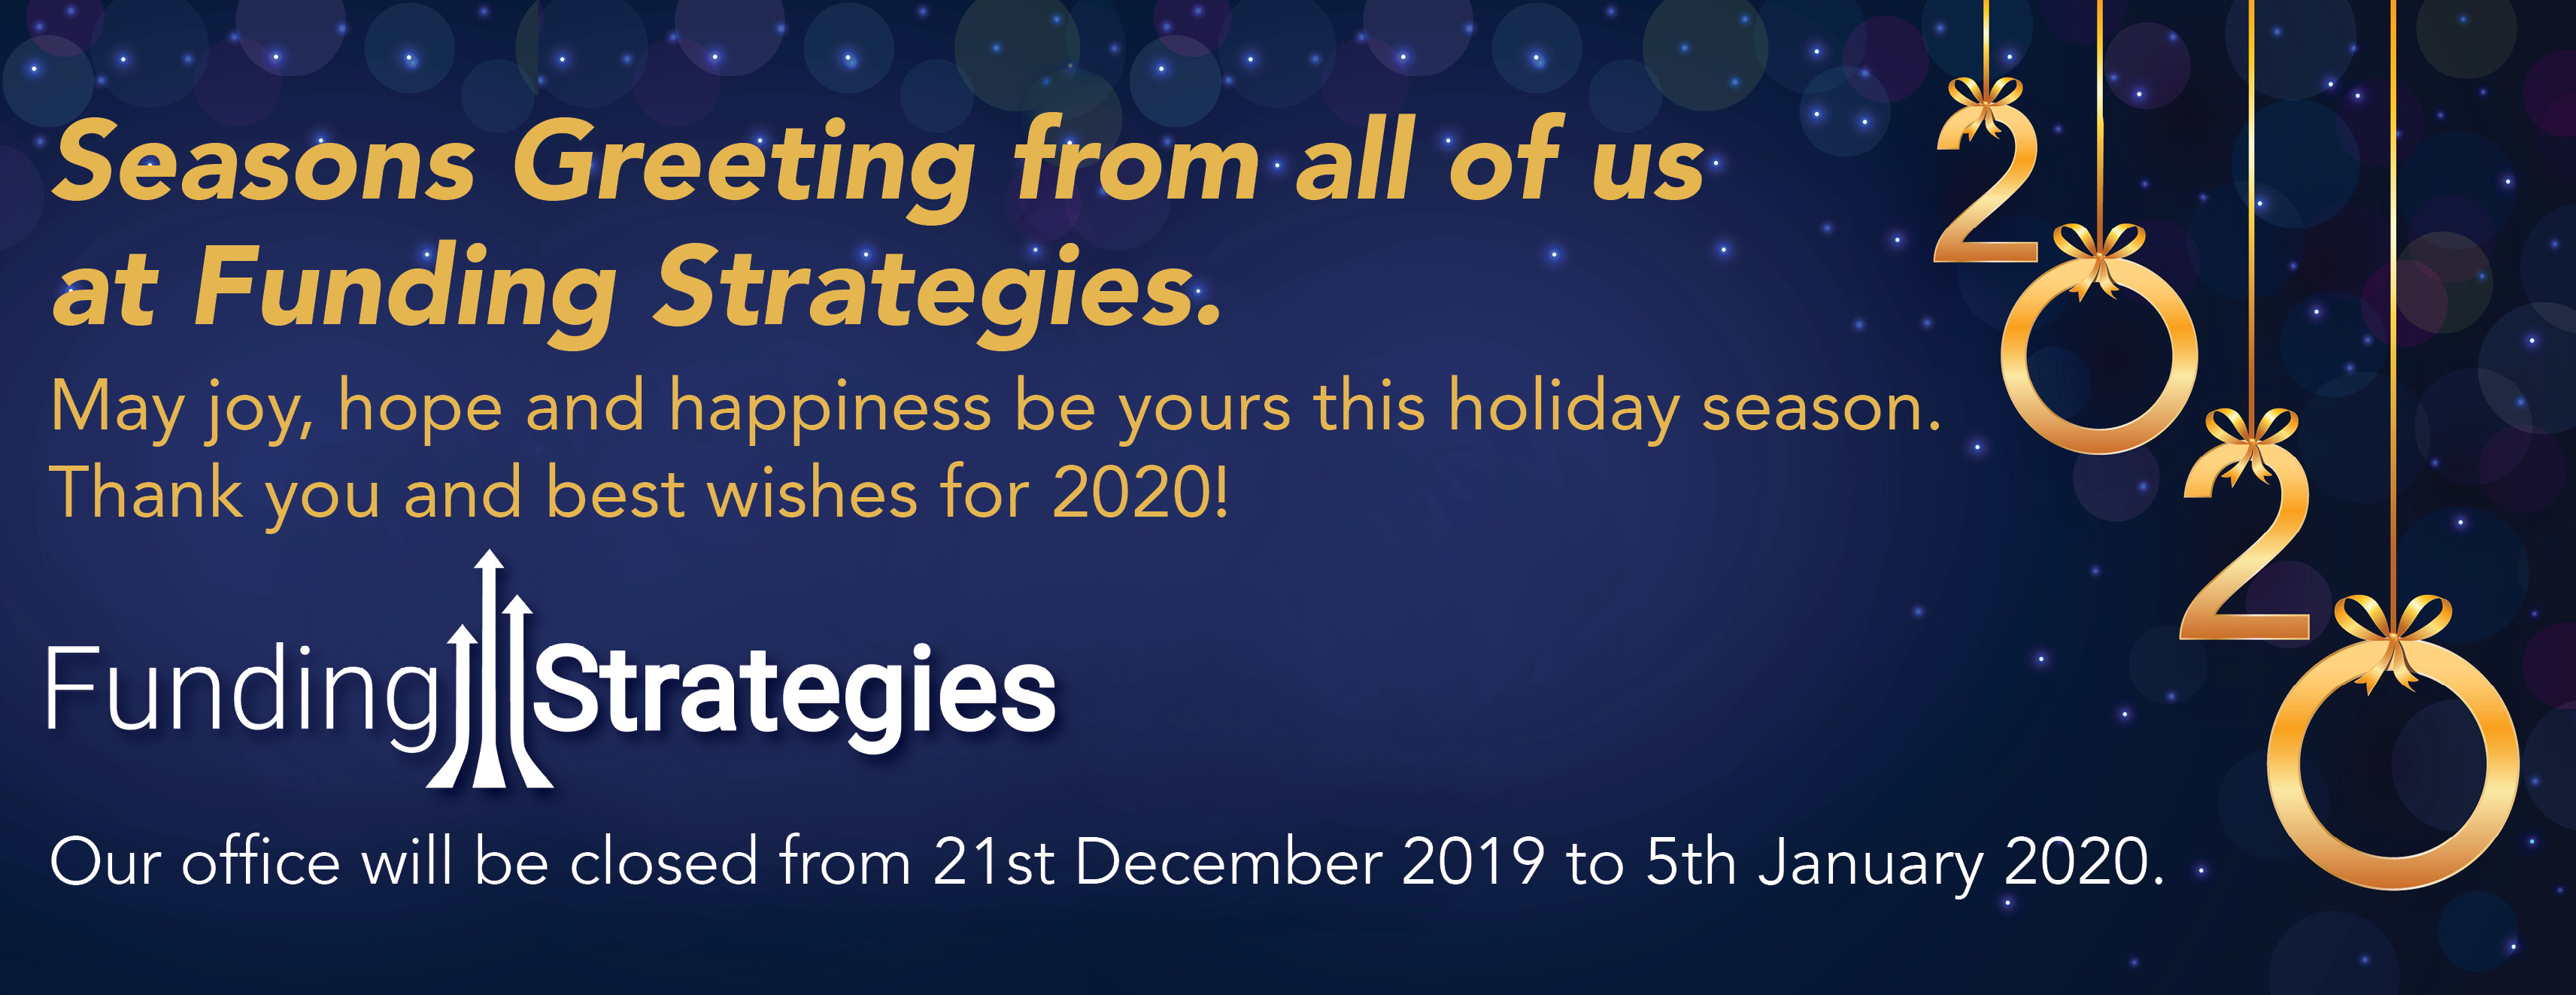 Funding Strategies Christmas 2020